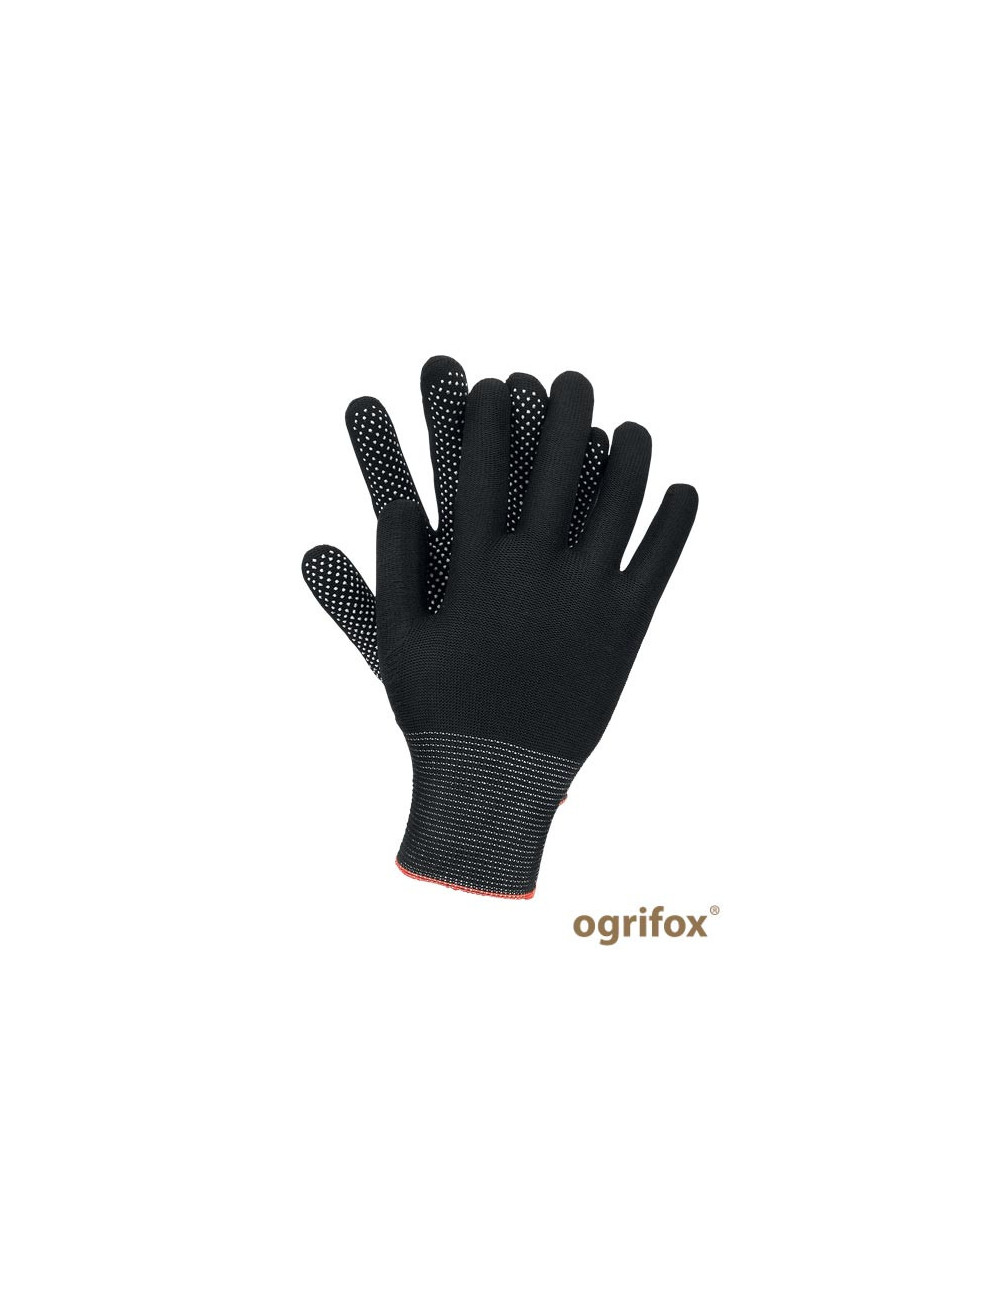 Working gloves ox.14.286 dotua ox-dotua bw black-white Ogrifox